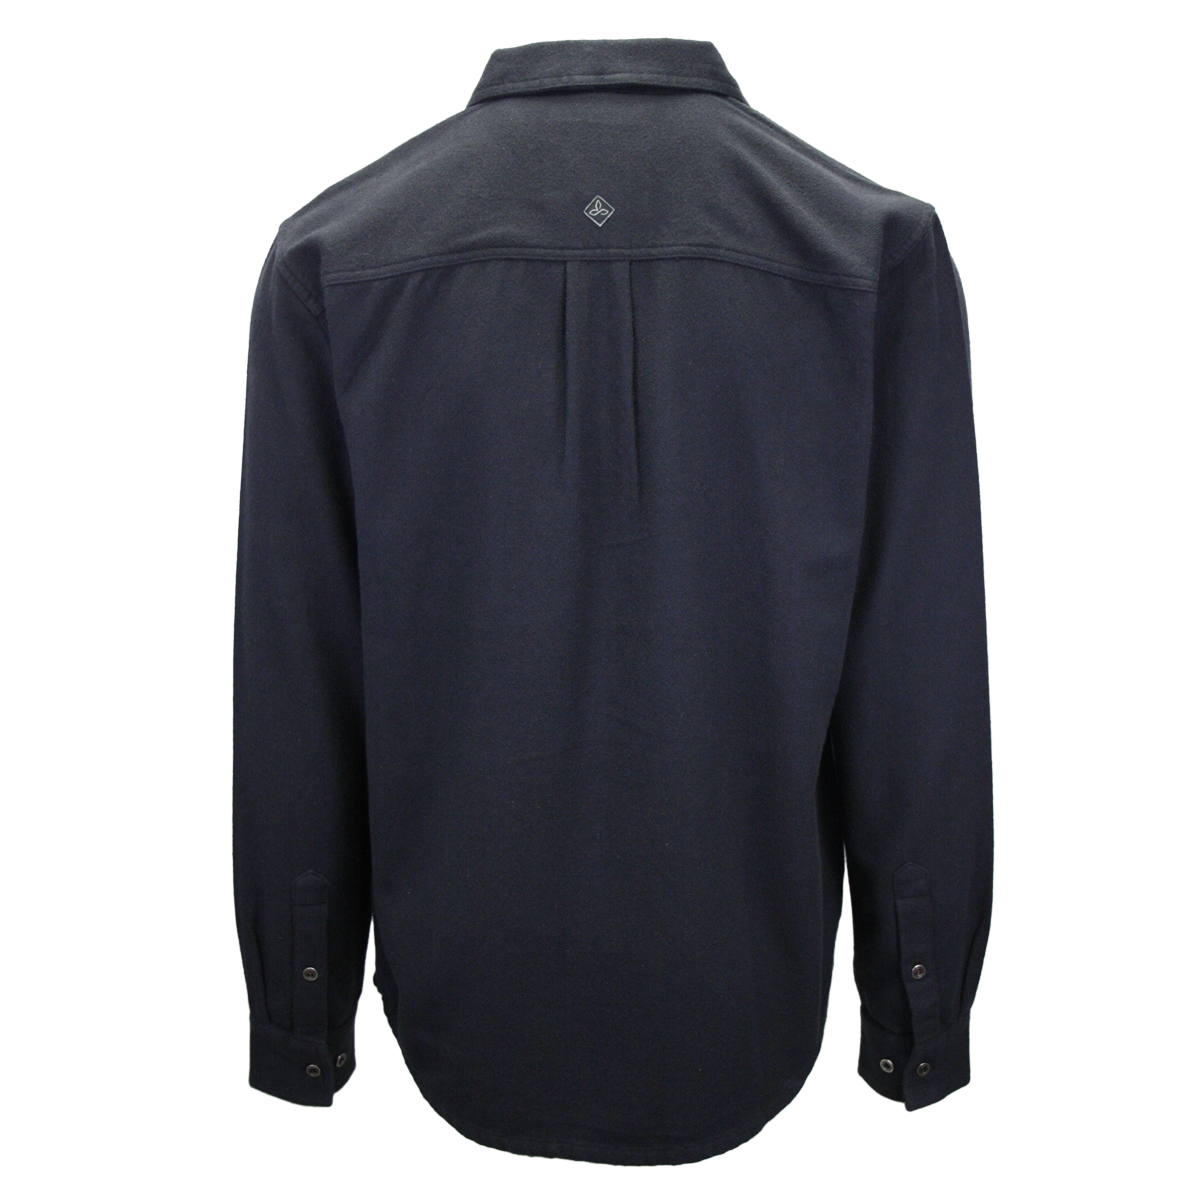 prAna Men's Solid Dark Navy L/S Flannel Shirt (S31)